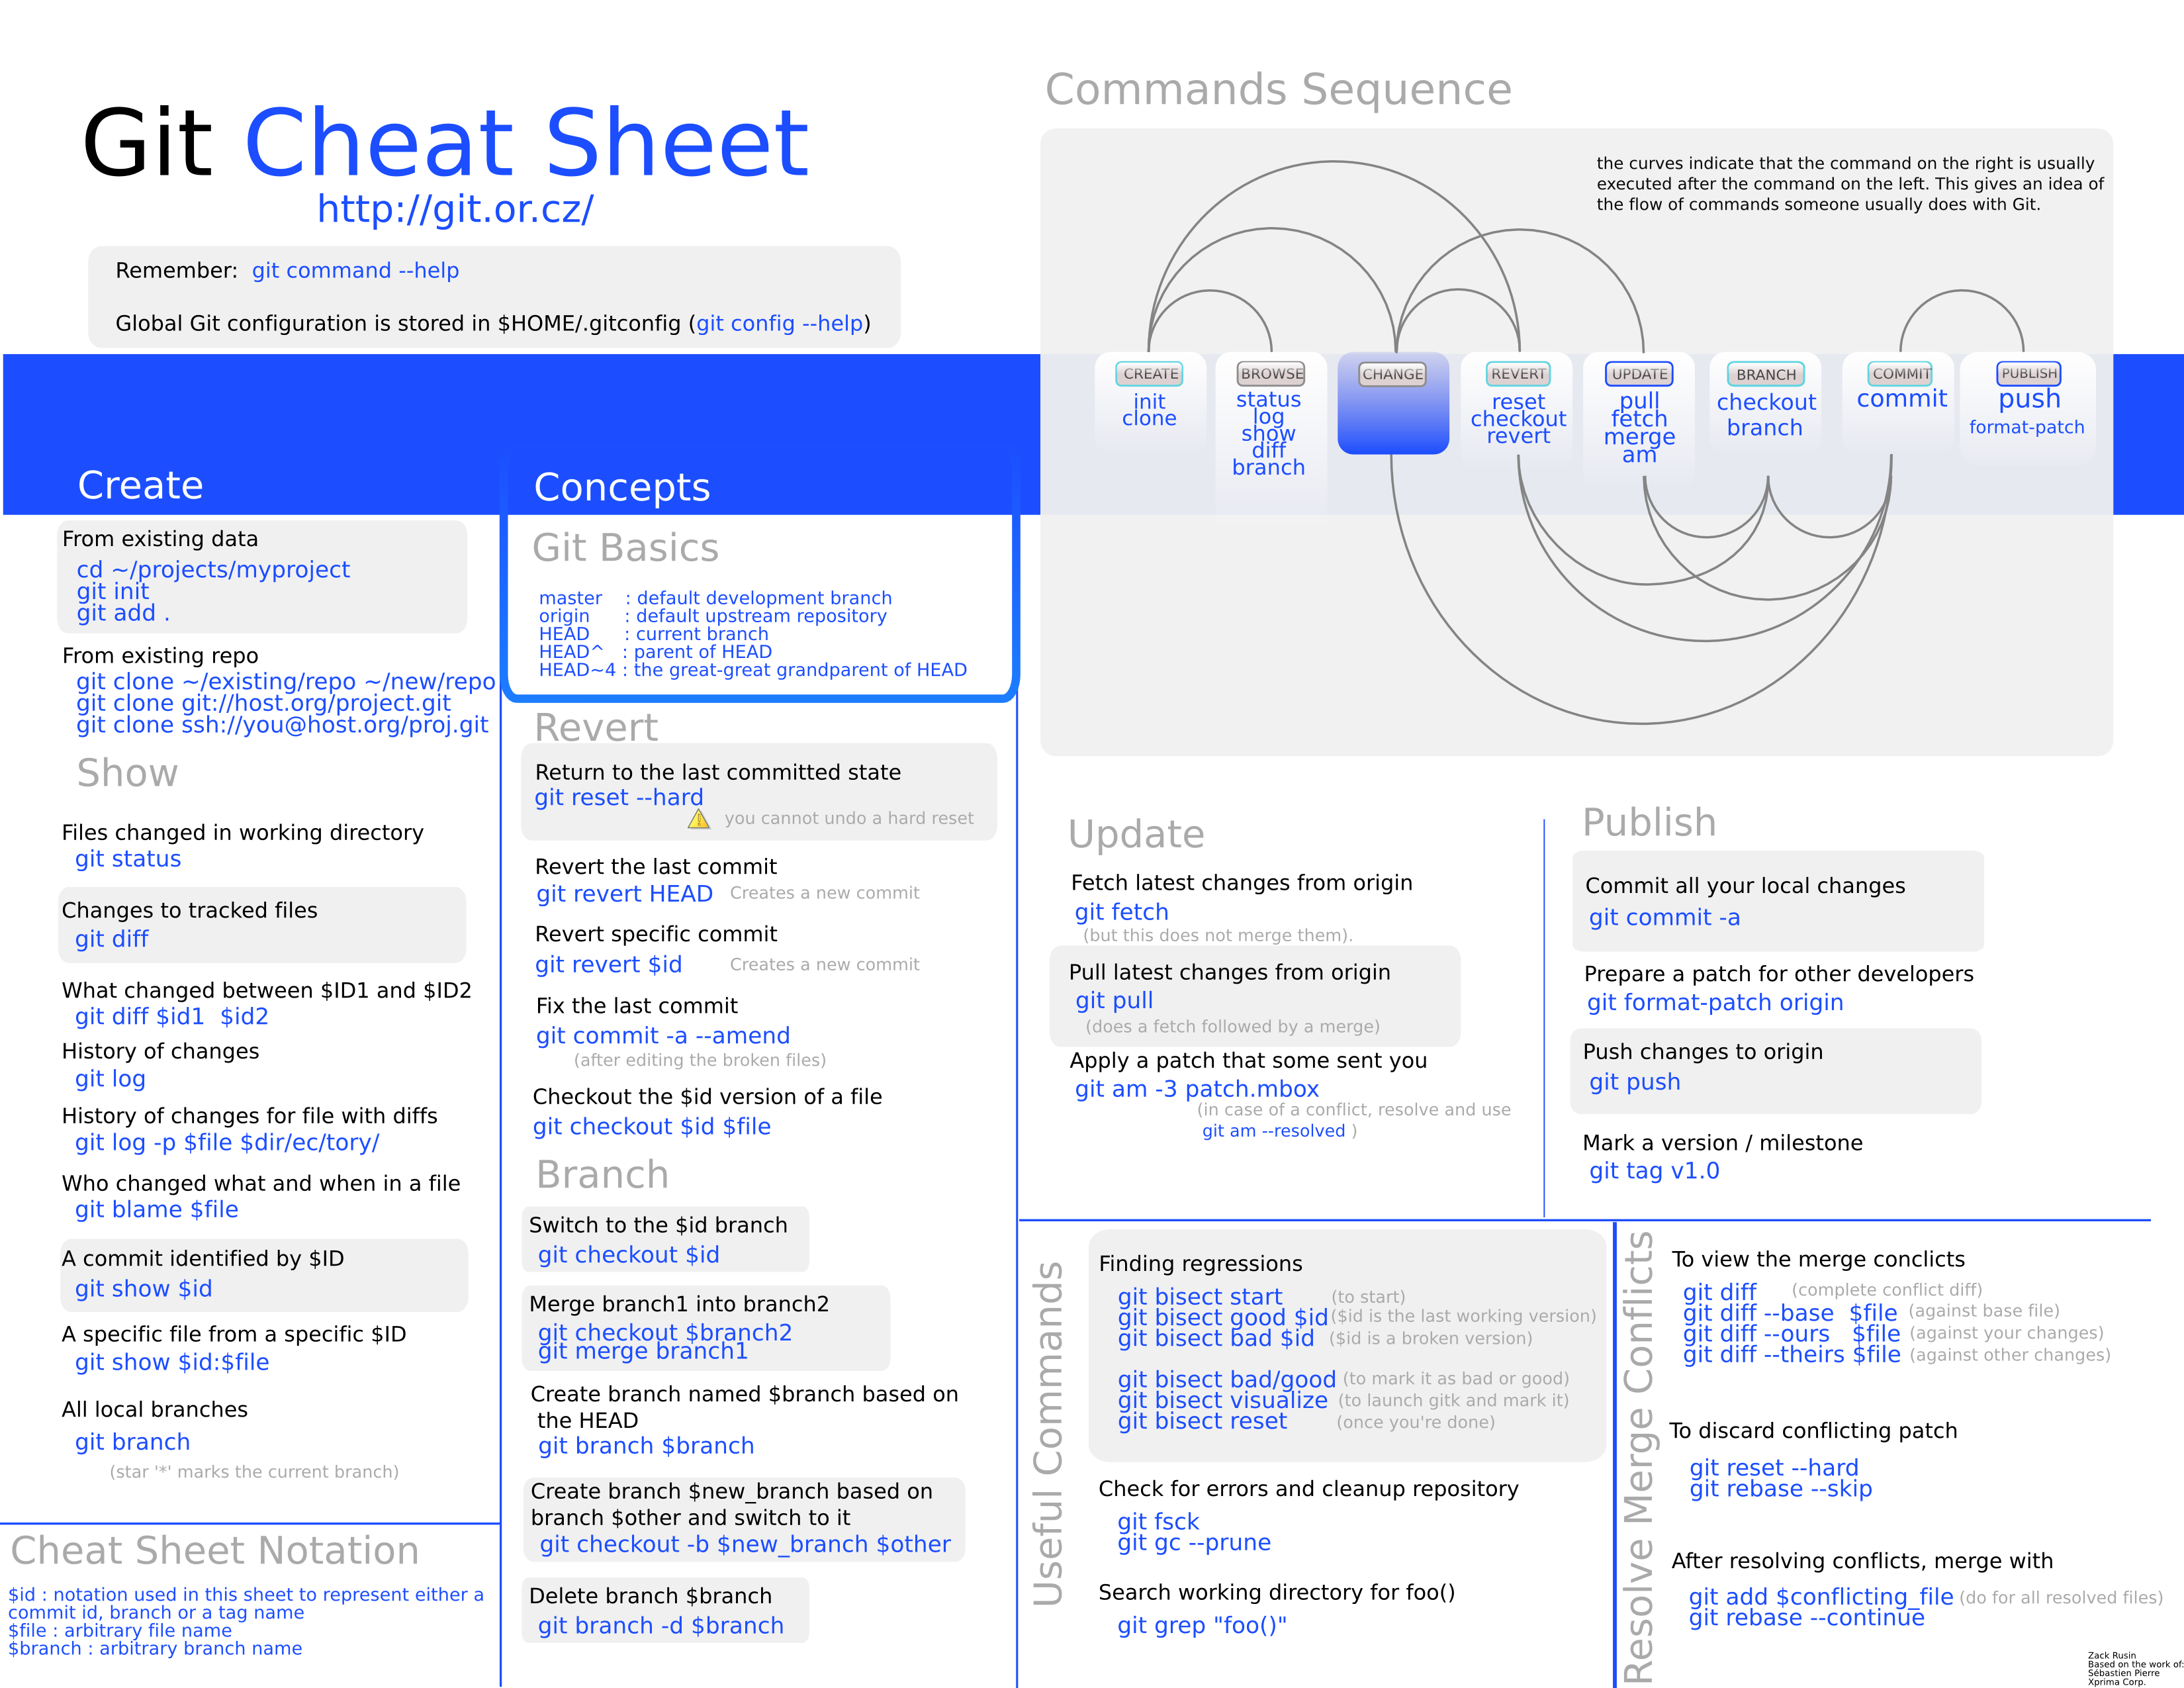 git/git-cheat-sheet-large-blue.png